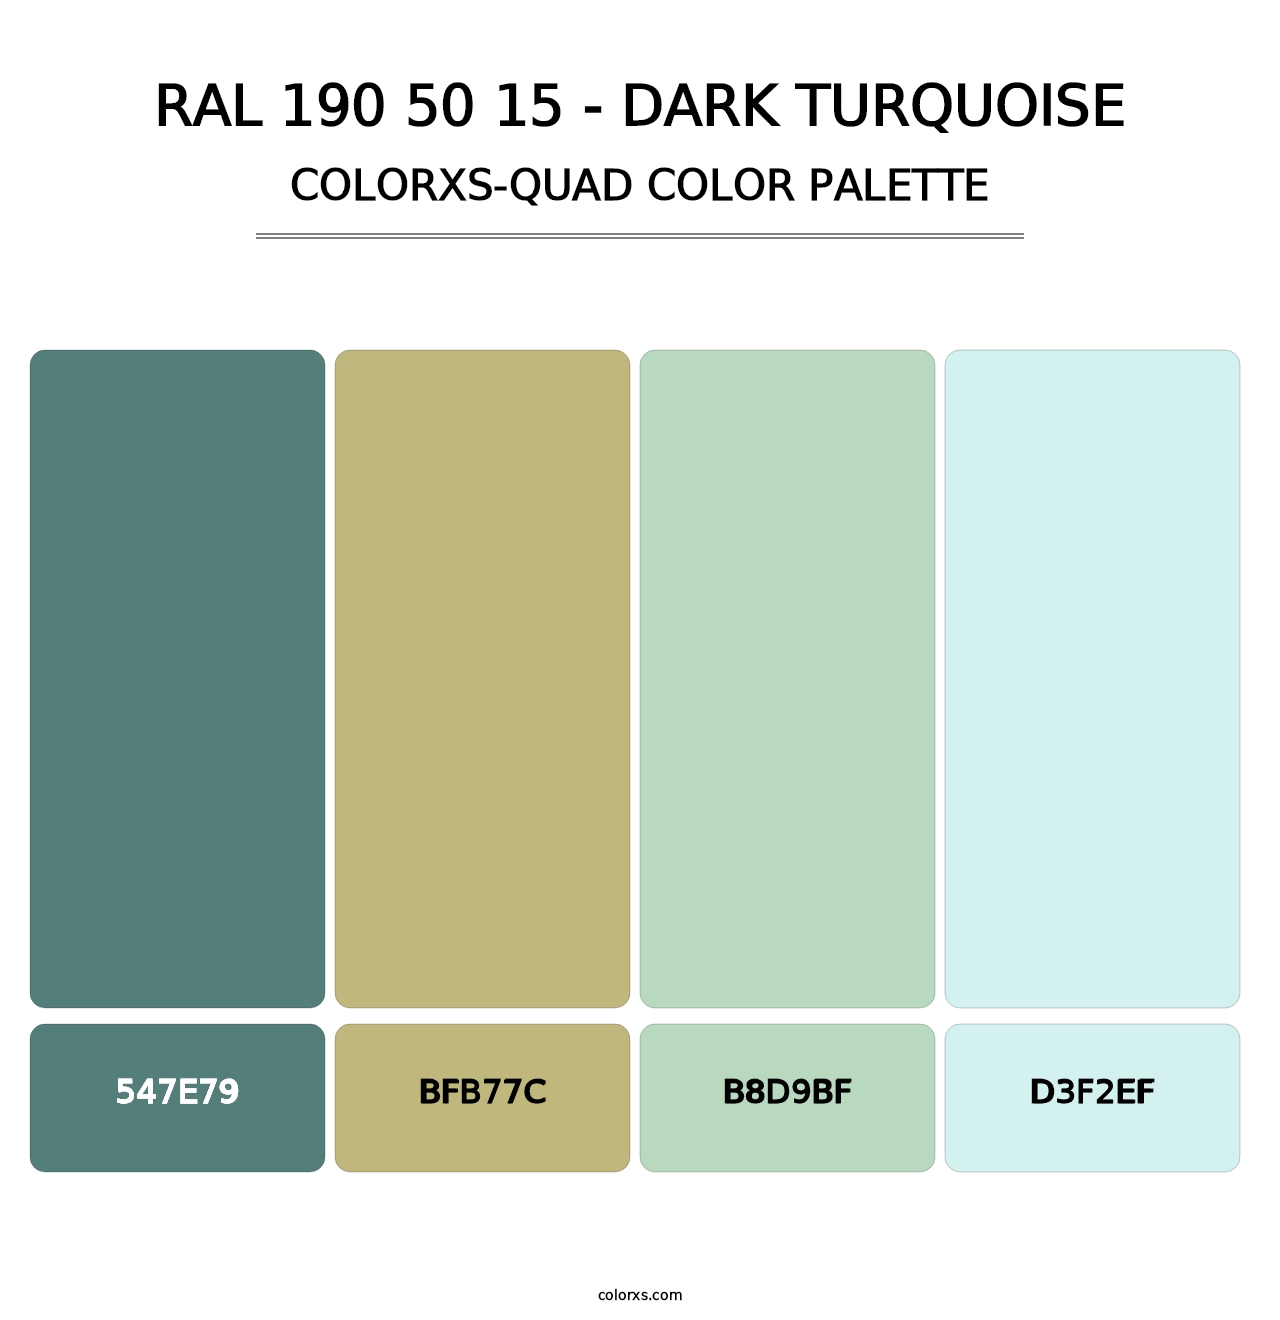 RAL 190 50 15 - Dark Turquoise - Colorxs Quad Palette